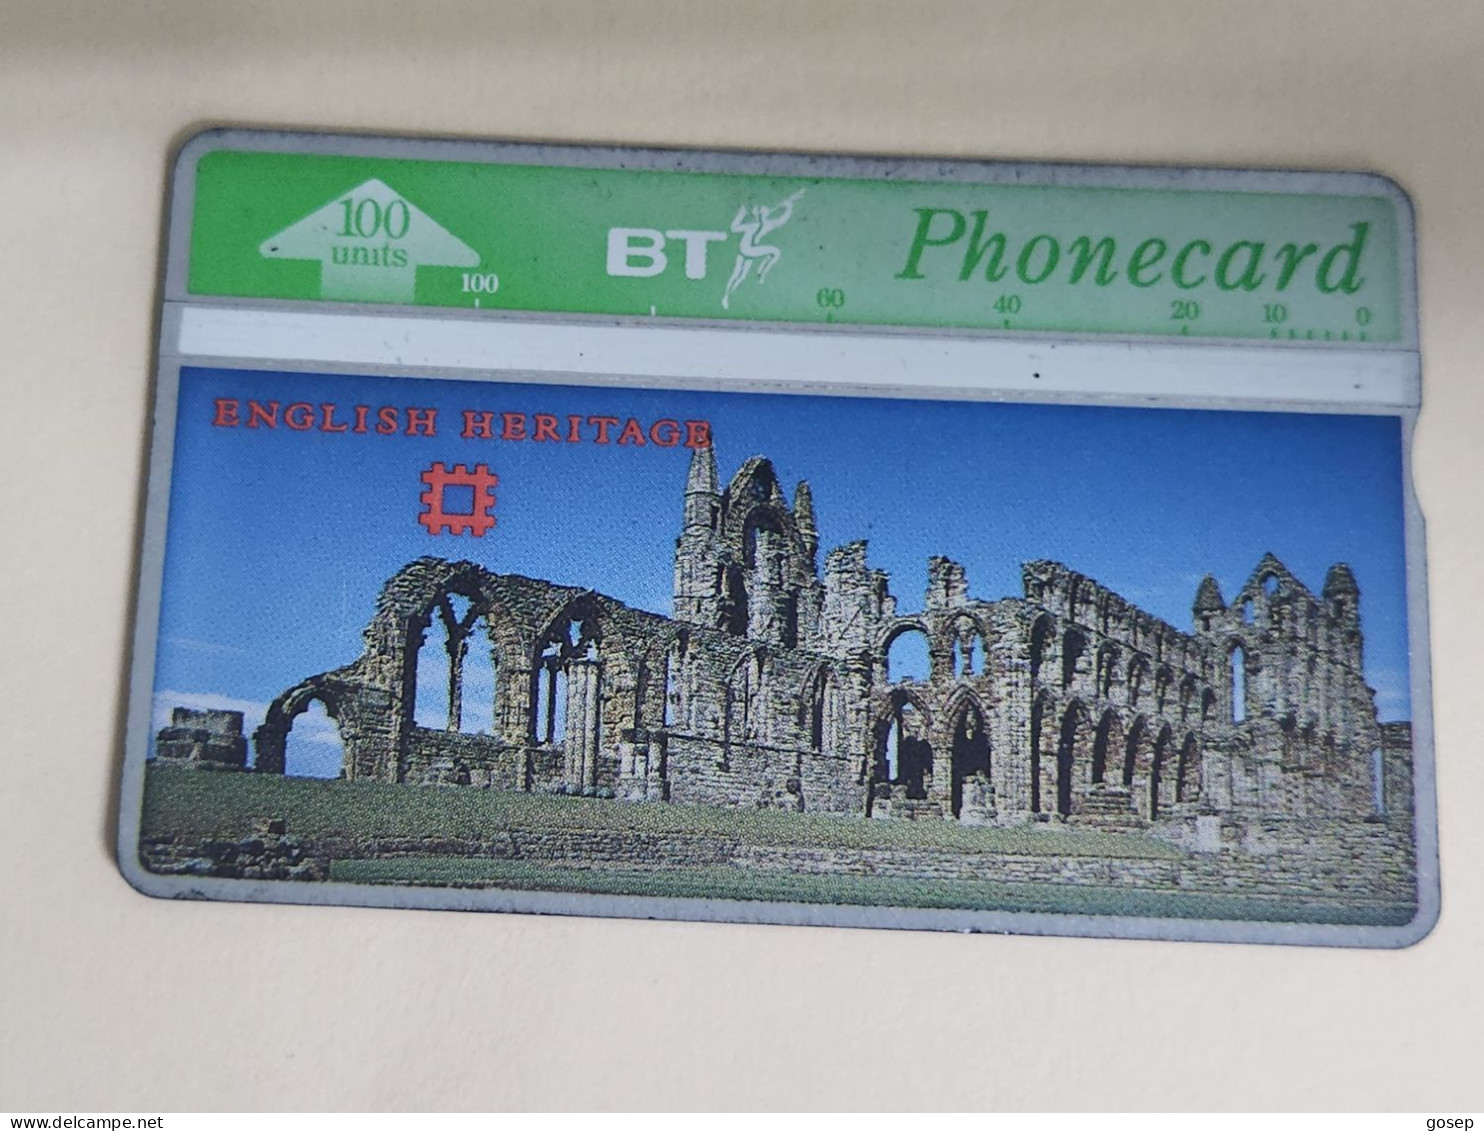 United Kingdom-(BTA122)-HERITAGE-Whitby Abbey-(217)(100units)(527H30198)price Cataloge3.00£-used+1card Prepiad Free - BT Werbezwecke